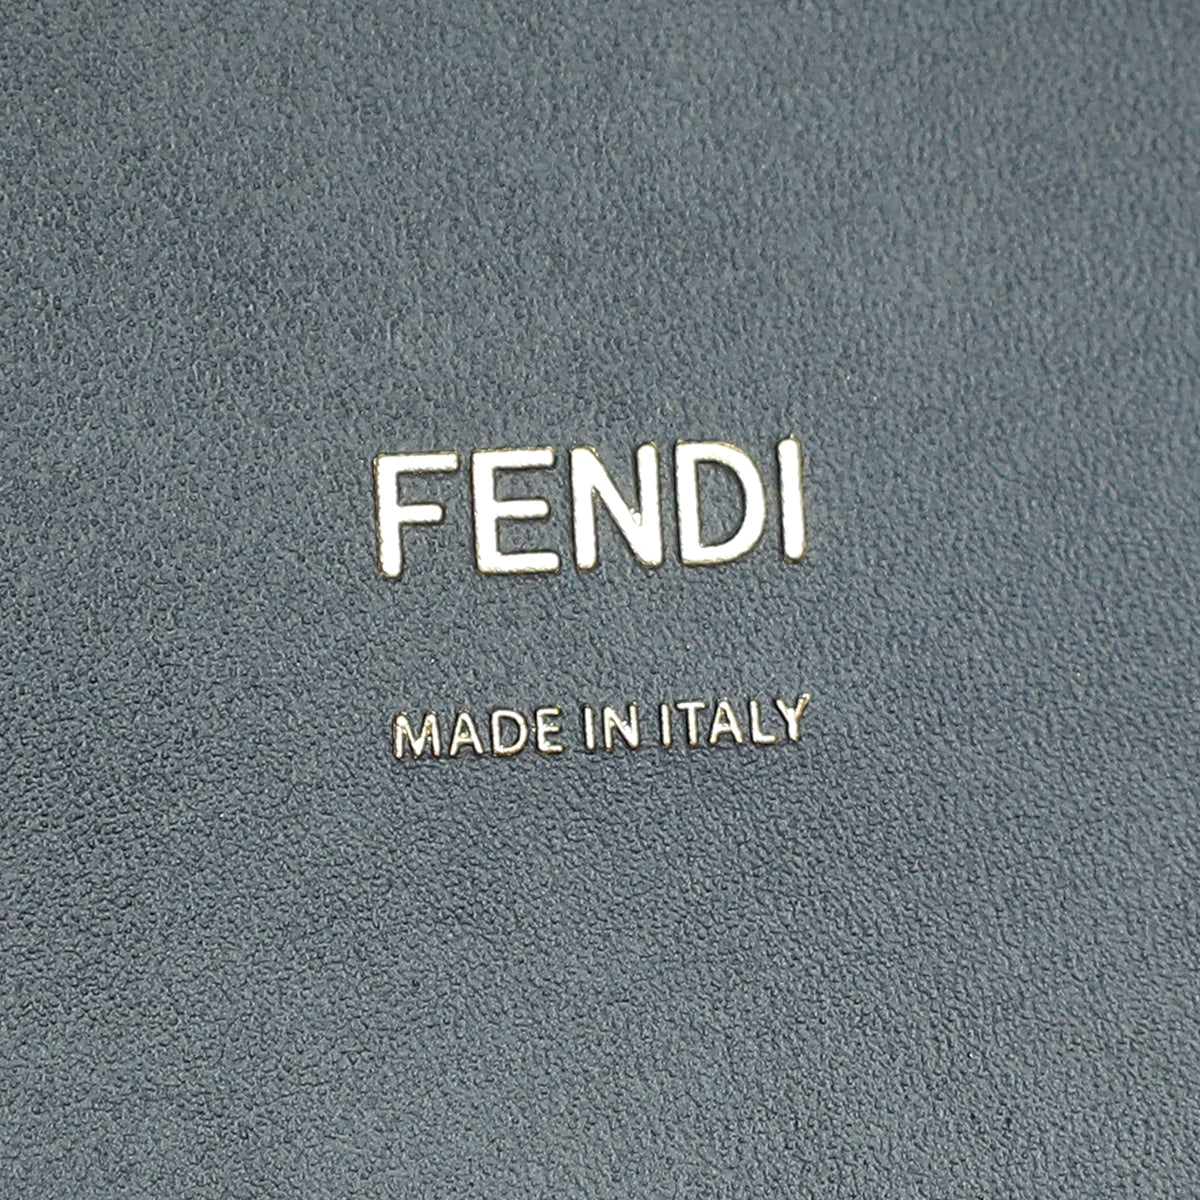 Fendi Navy Blue Sunshine “FENDI ROMA” Shopper Medium Bag W/ Strap You